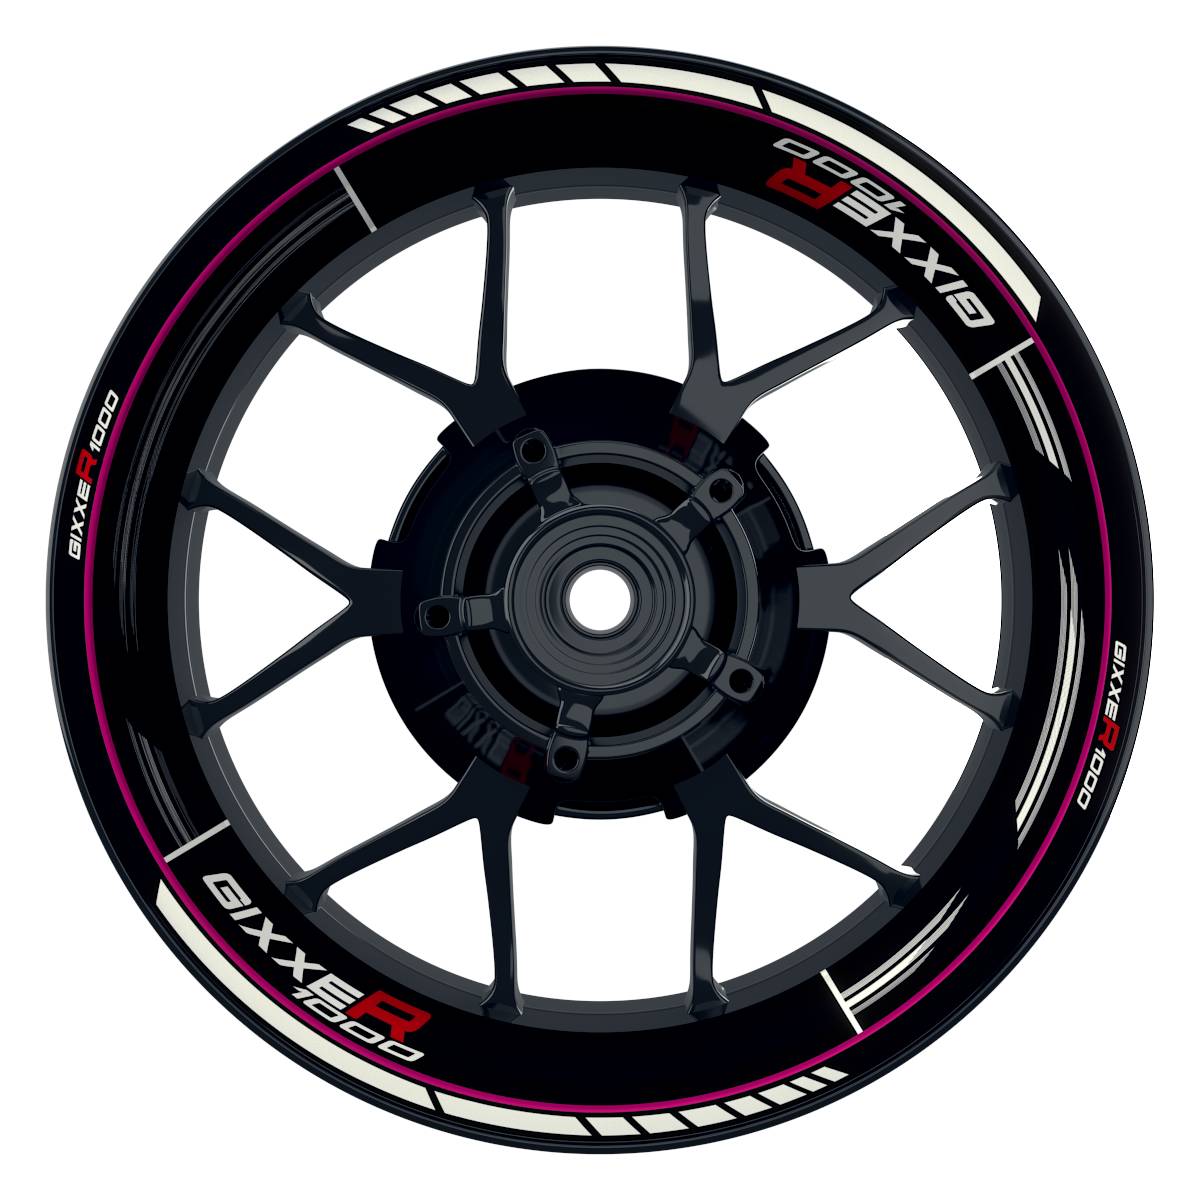 GIXXER1000 Scratched schwarz pink Wheelsticker Felgenaufkleber